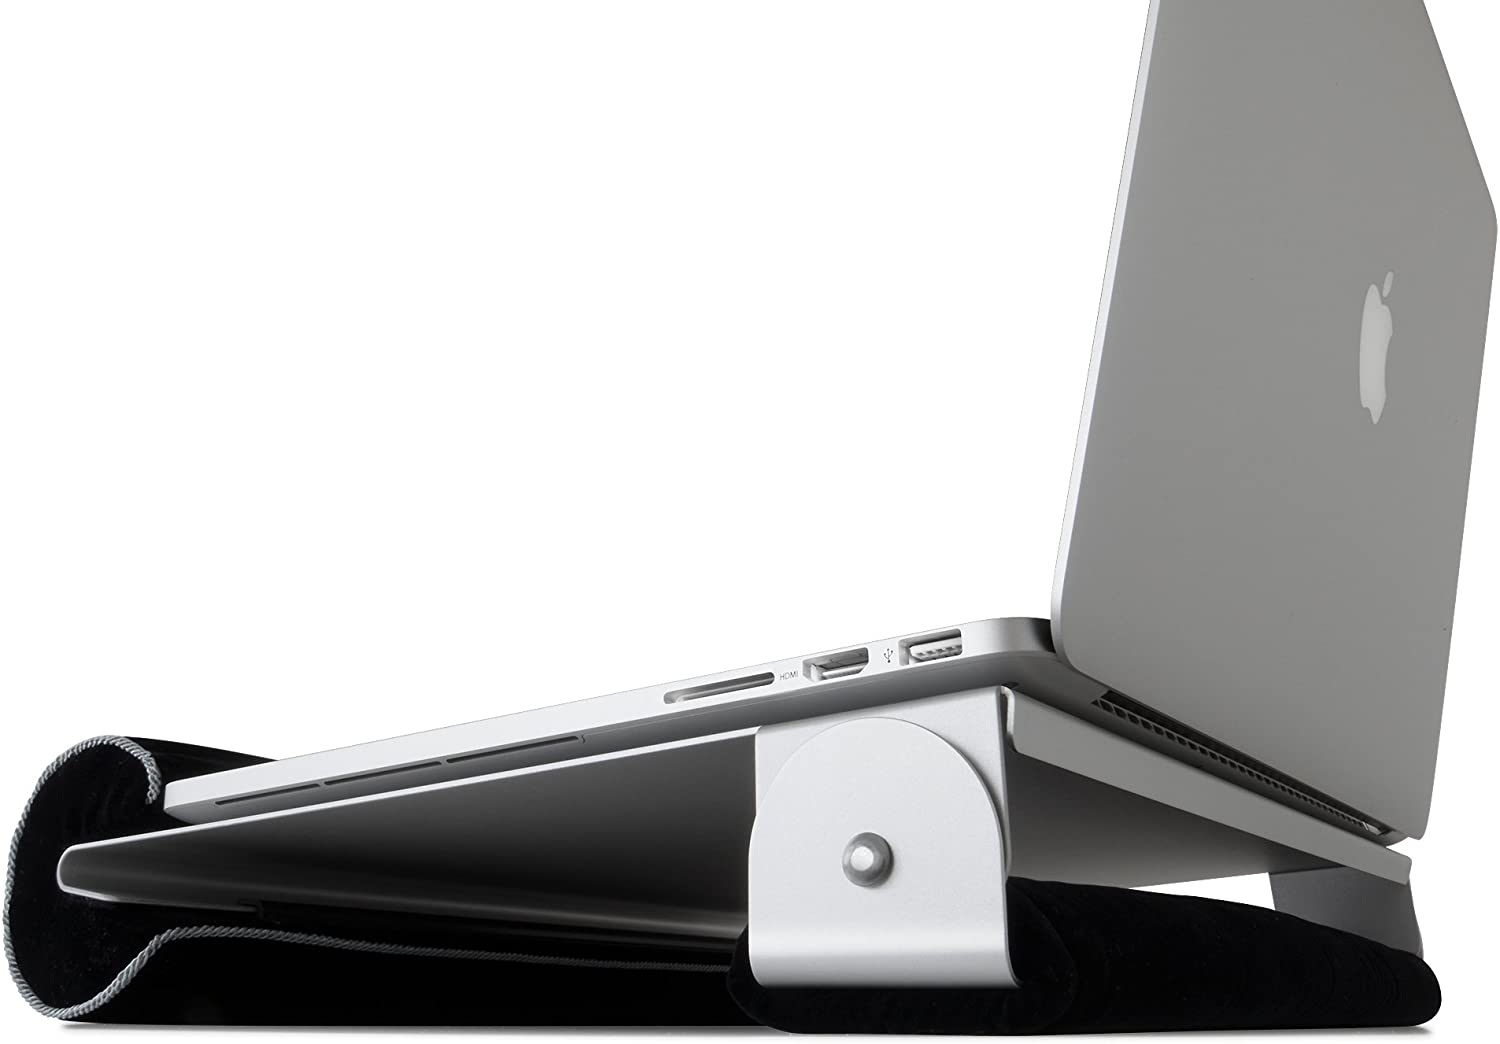 Rain Design iLap Lap Stand 13" for MacBook Pro/Air 13"